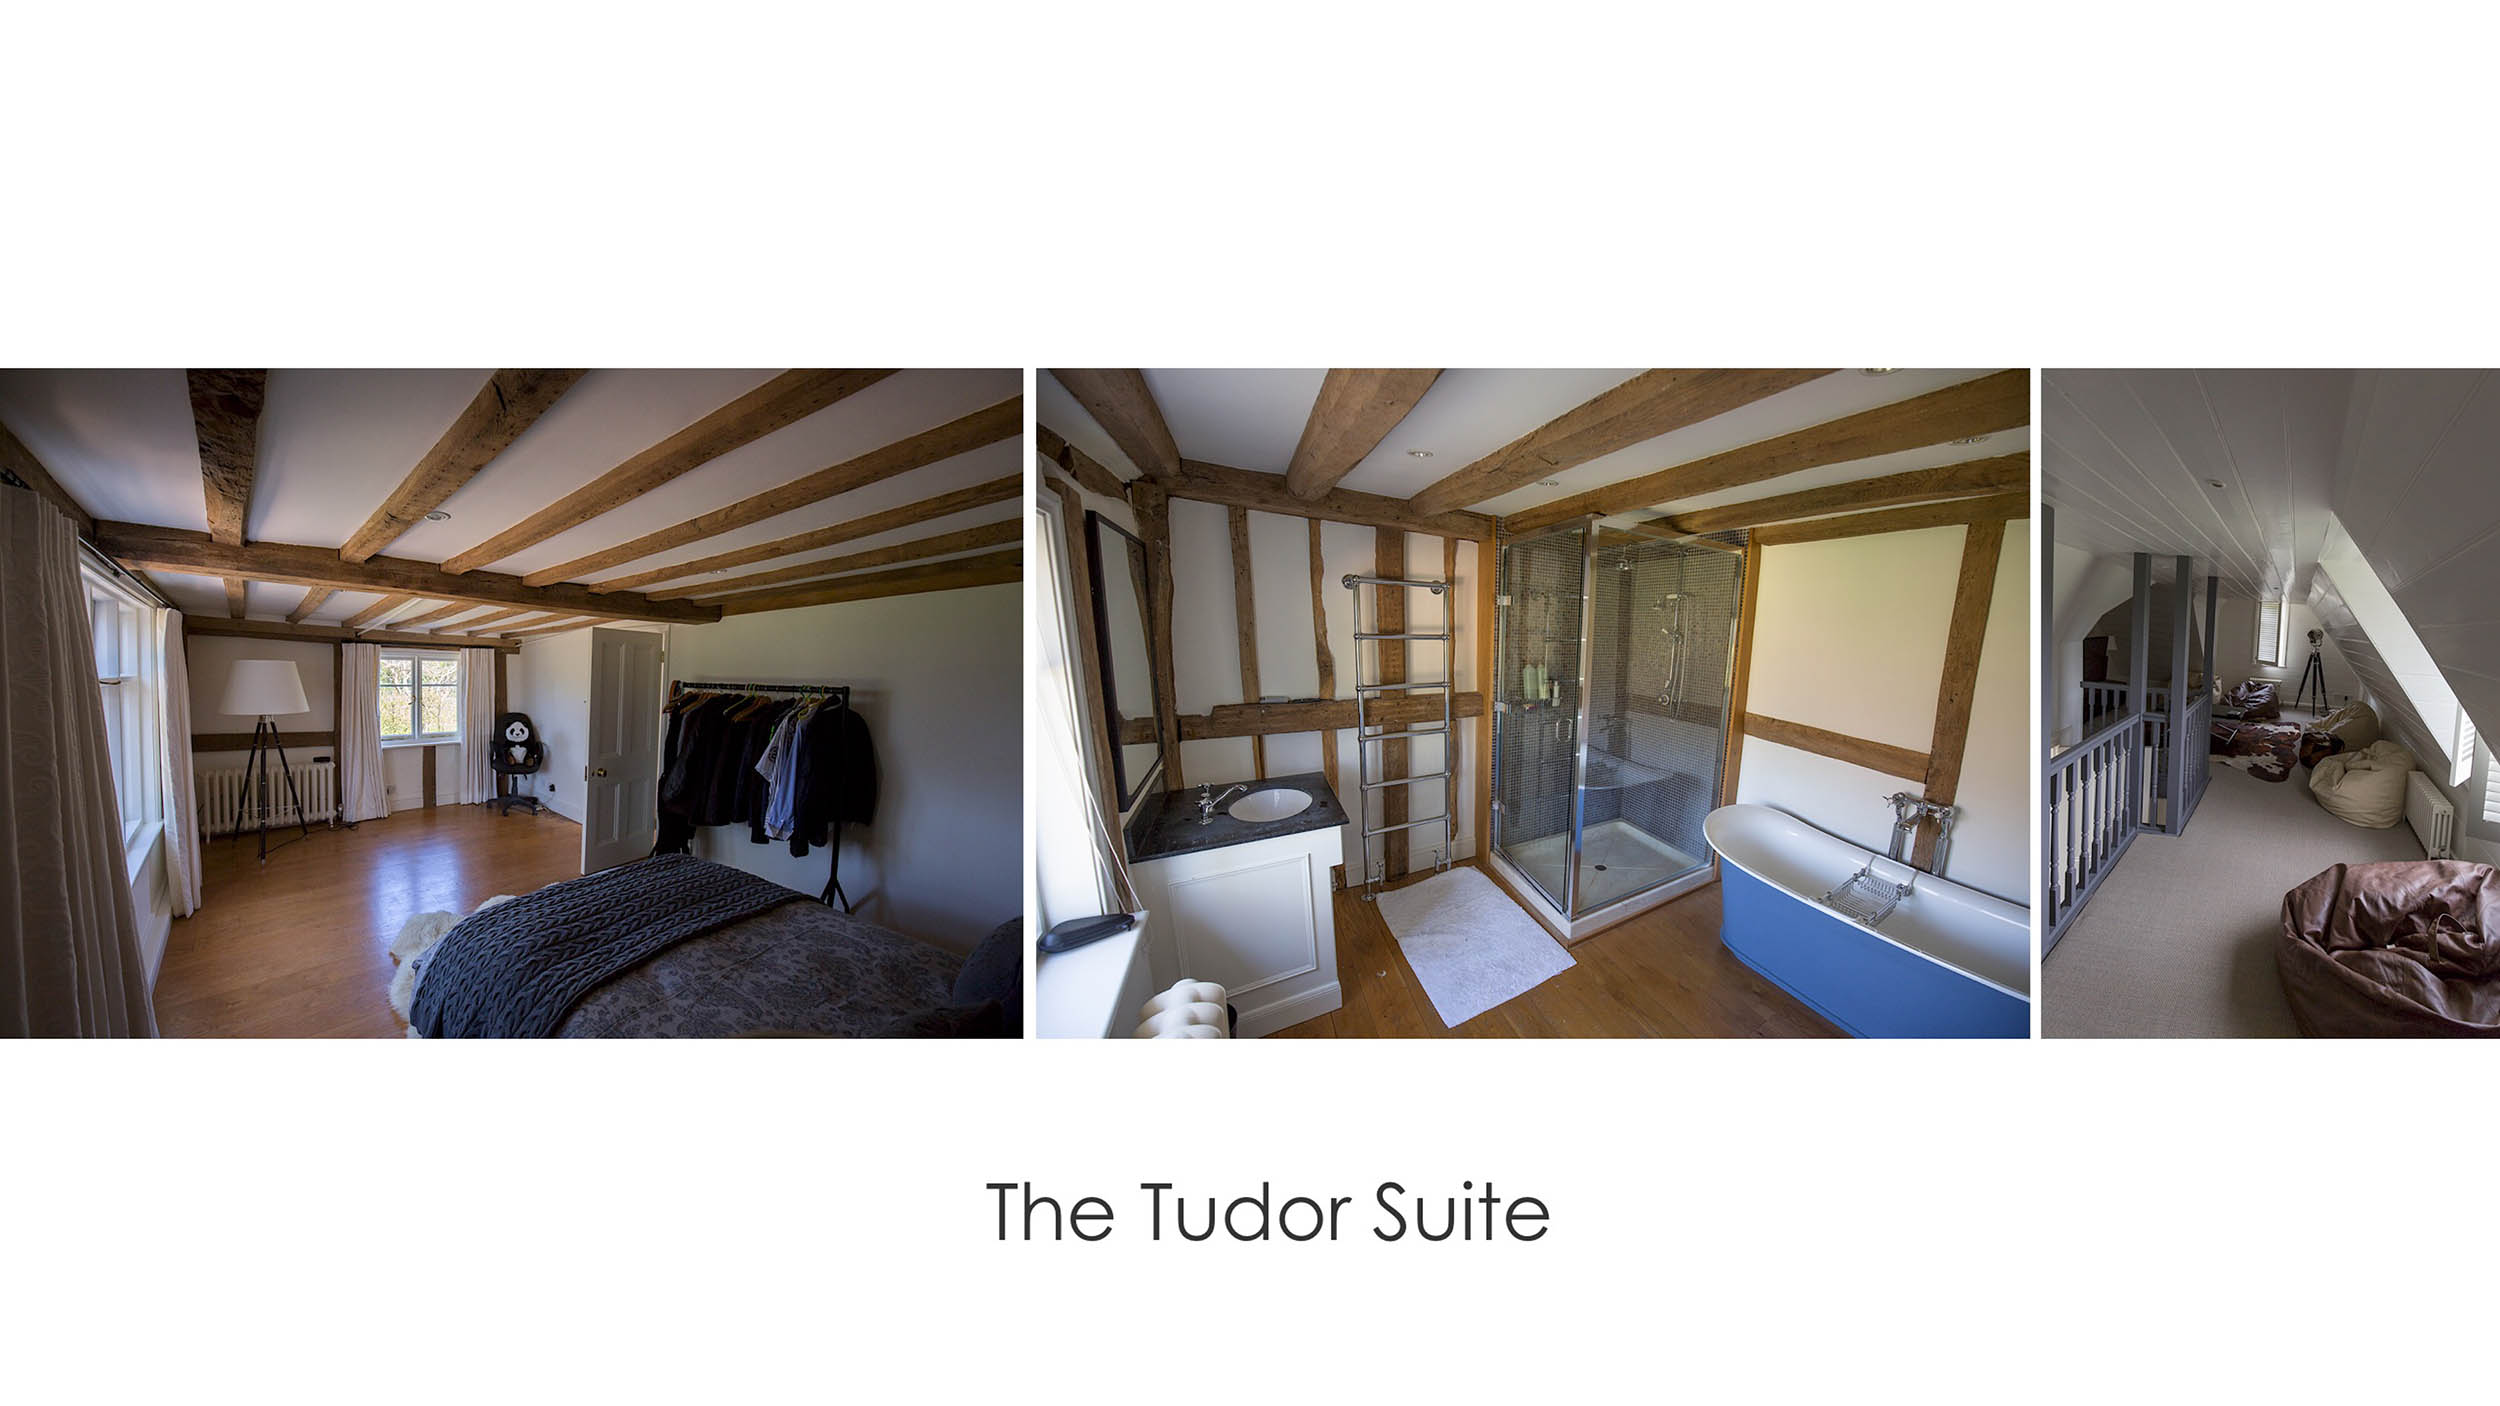 Tudor Suite - Pennybridge House - Real Estate Development Projects by Gabriella Atkinson.